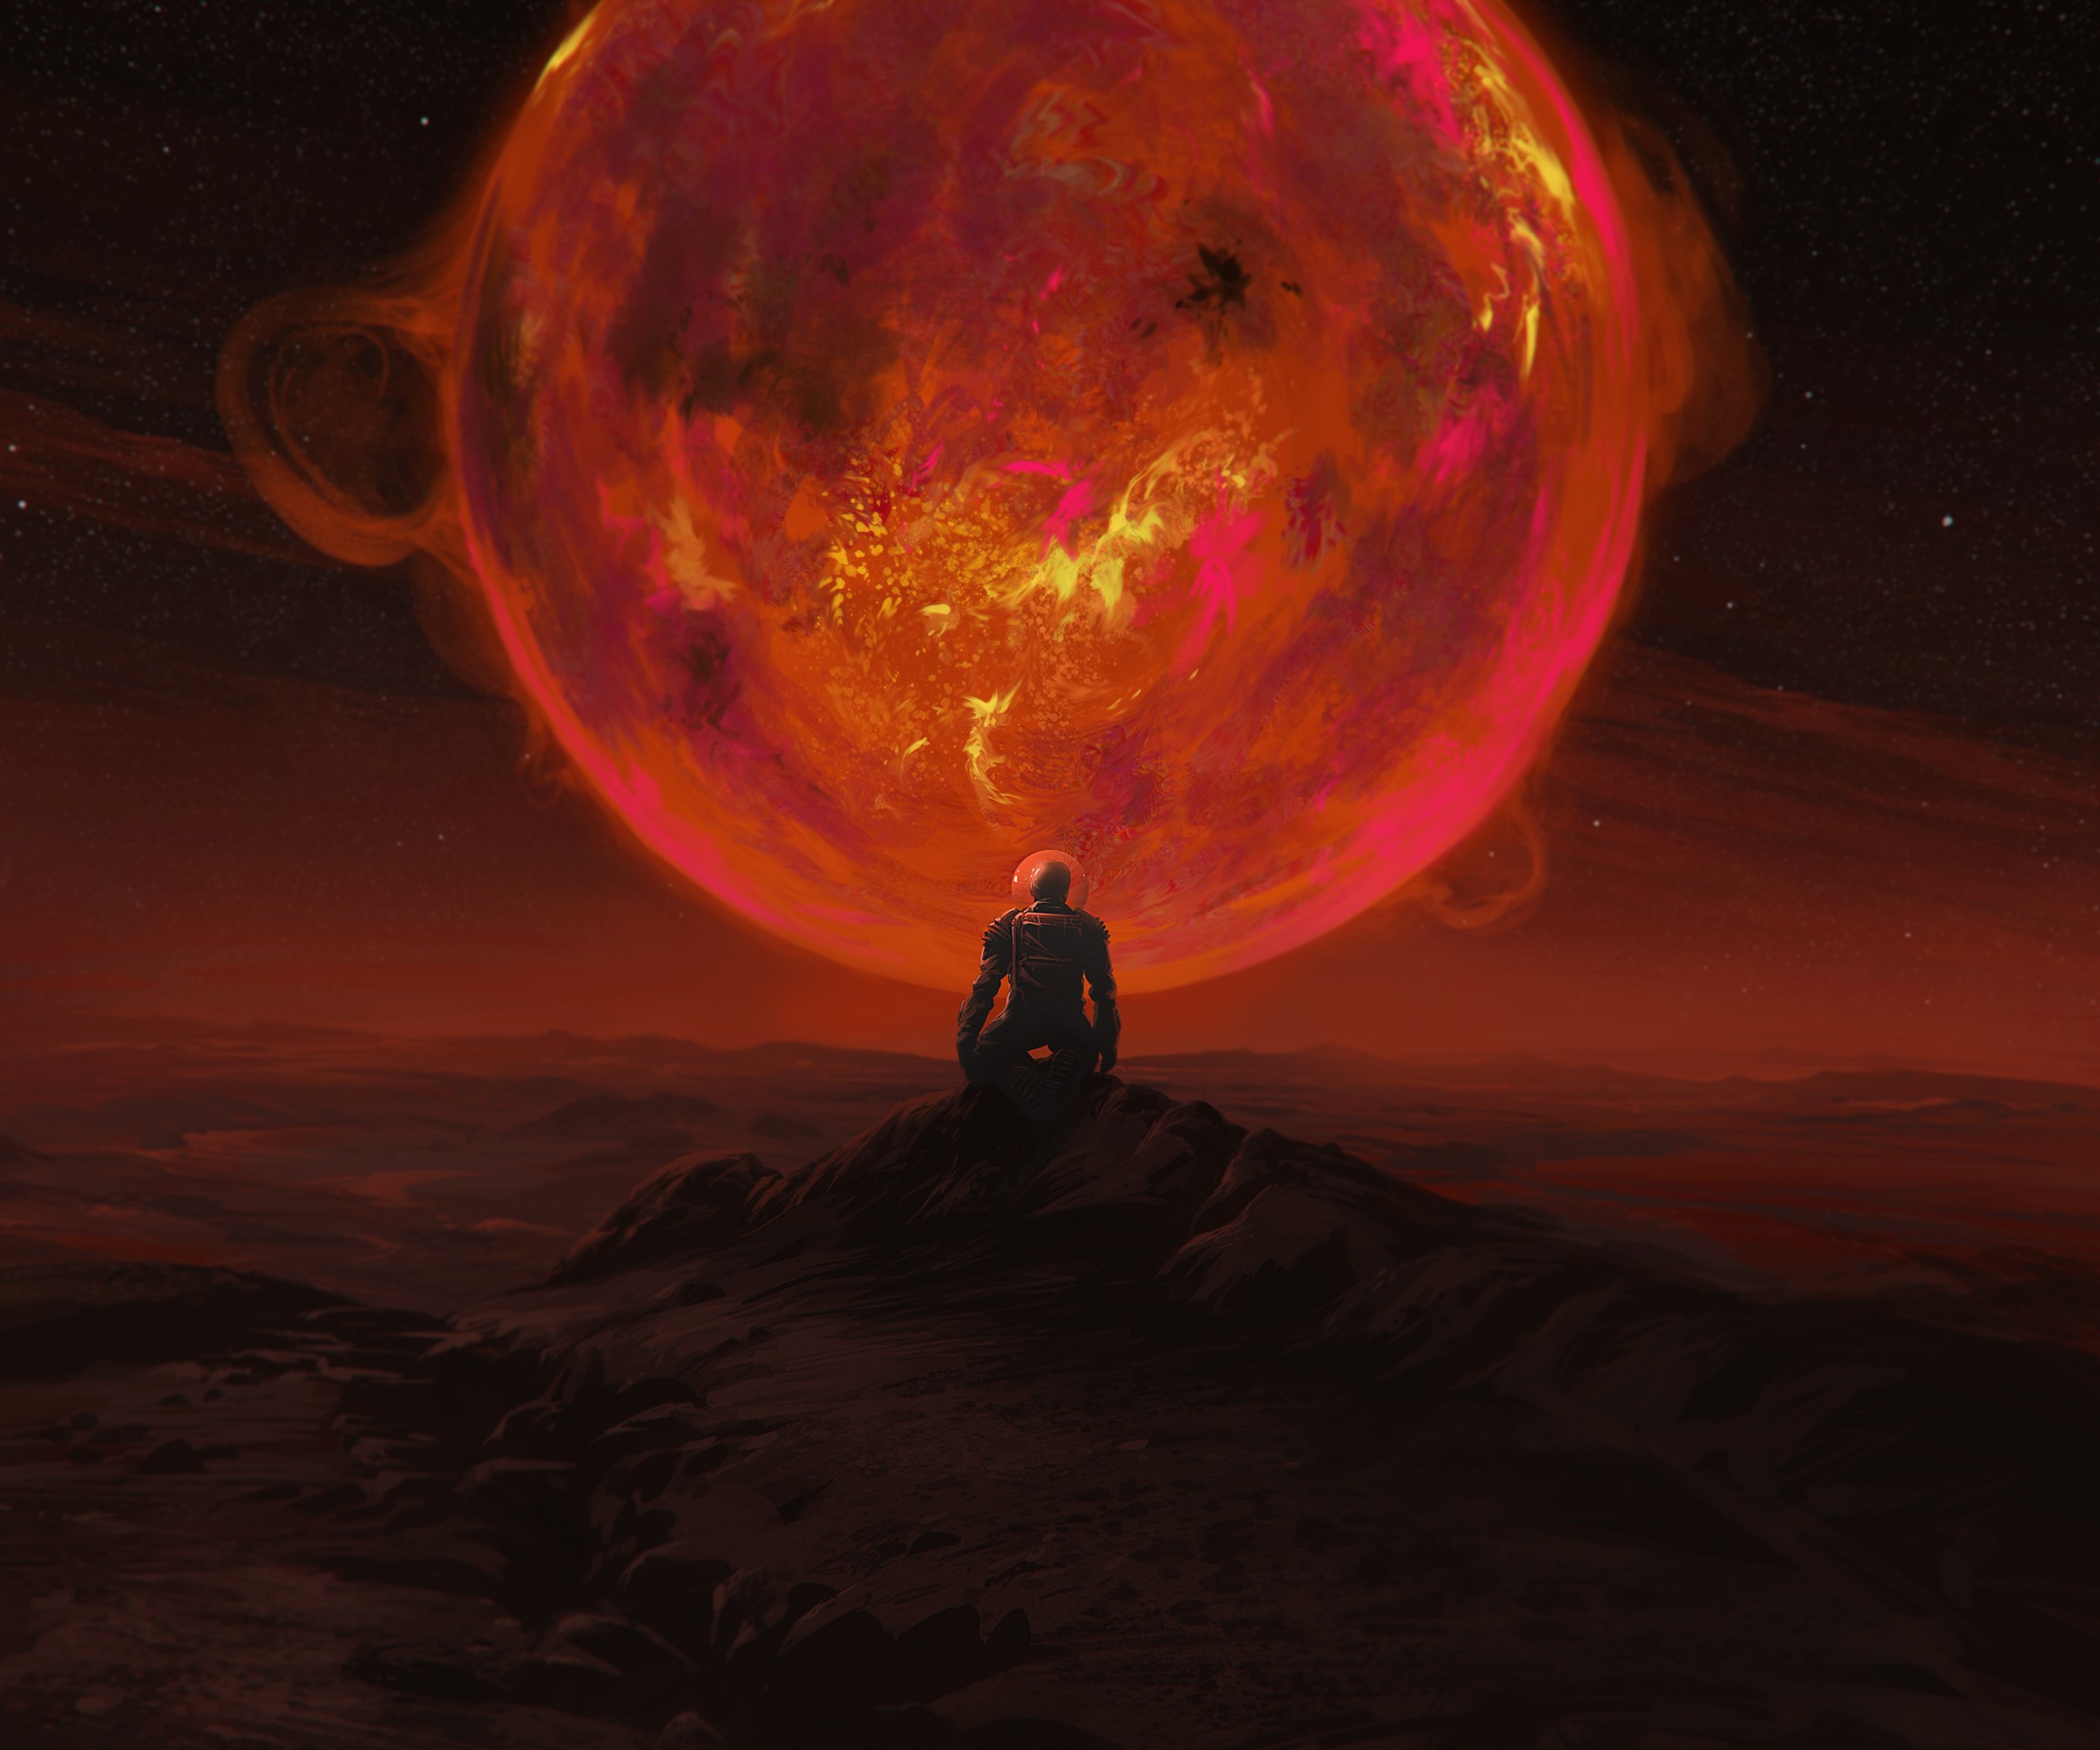 General 2400x2000 digital art artwork Sun astronaut space planet science fiction red